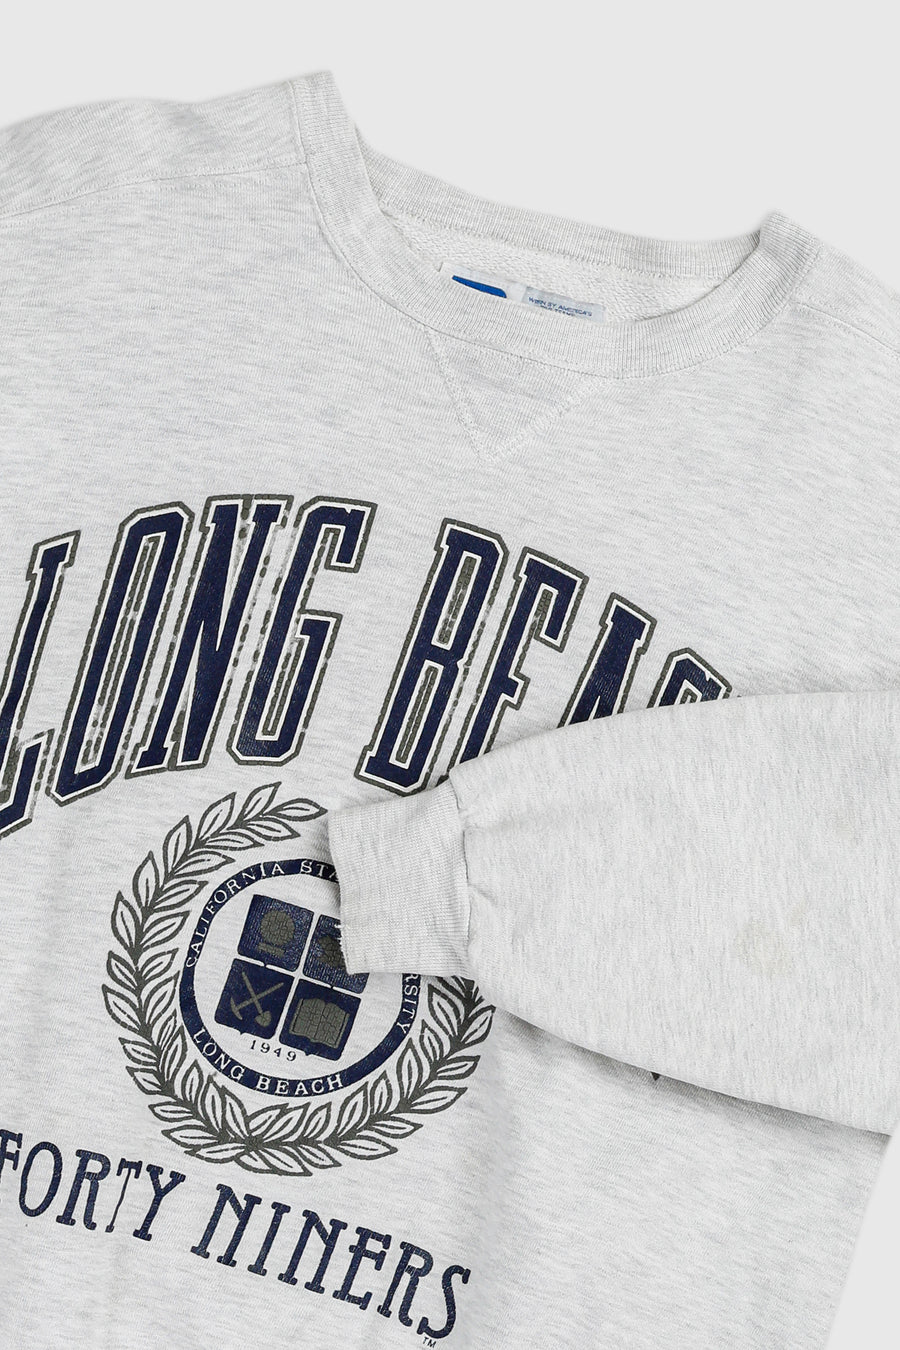 Vintage Long Beach Sweatshirt - L